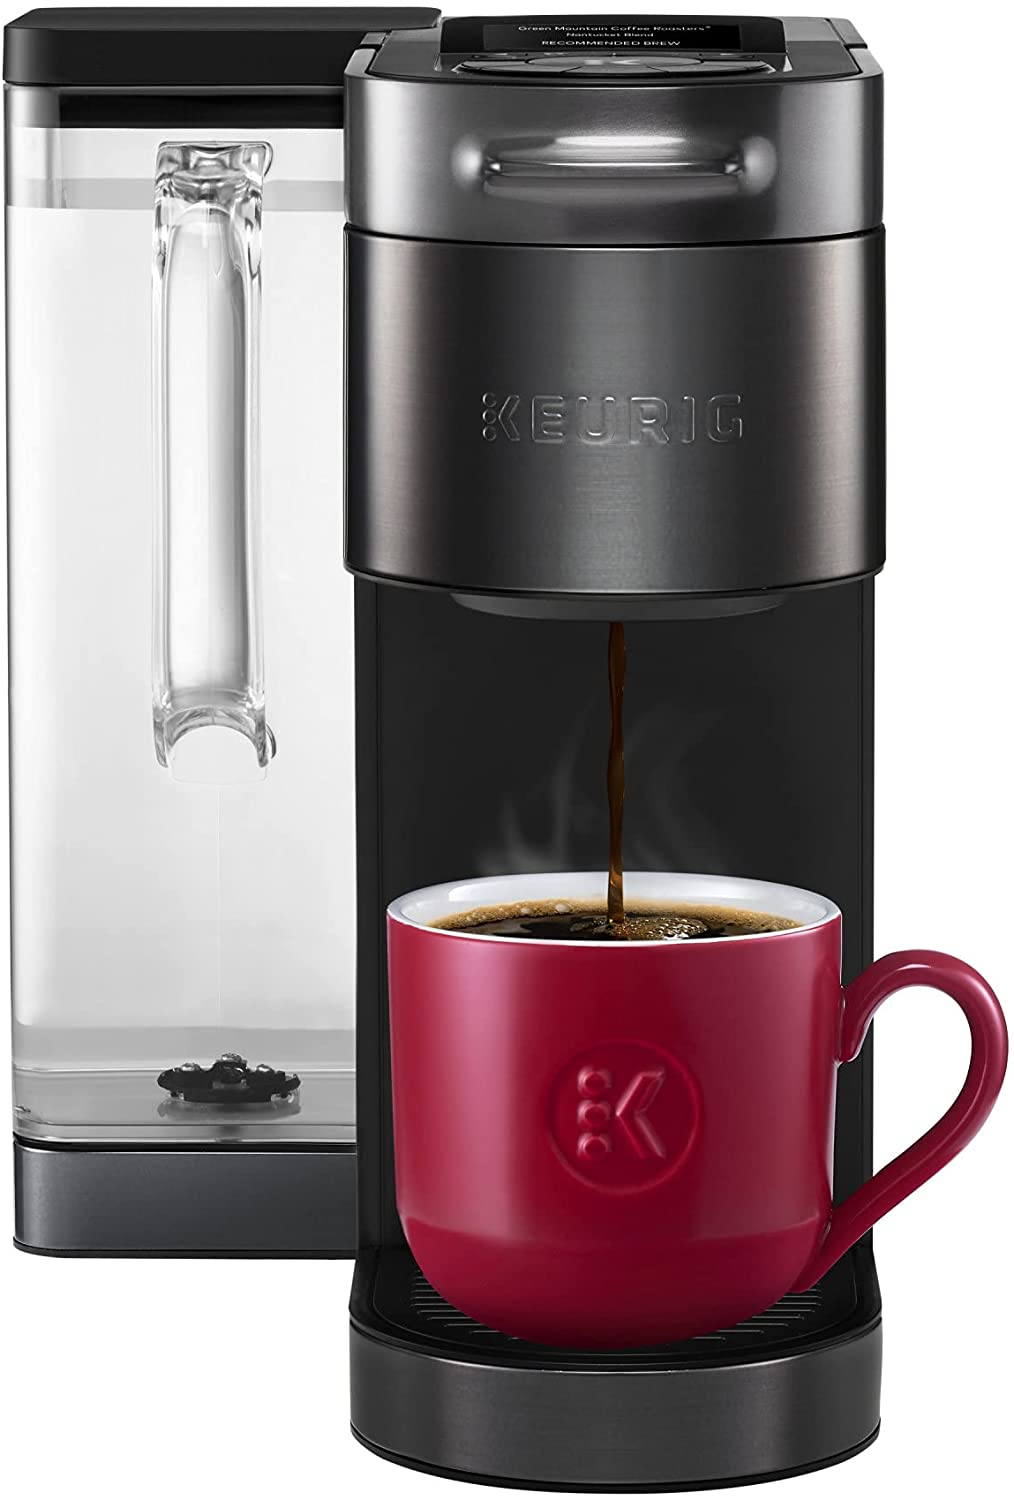 Amazon.com: Keurig K-Supreme Plus SMART Coffee Maker Brewer, Black $159.99